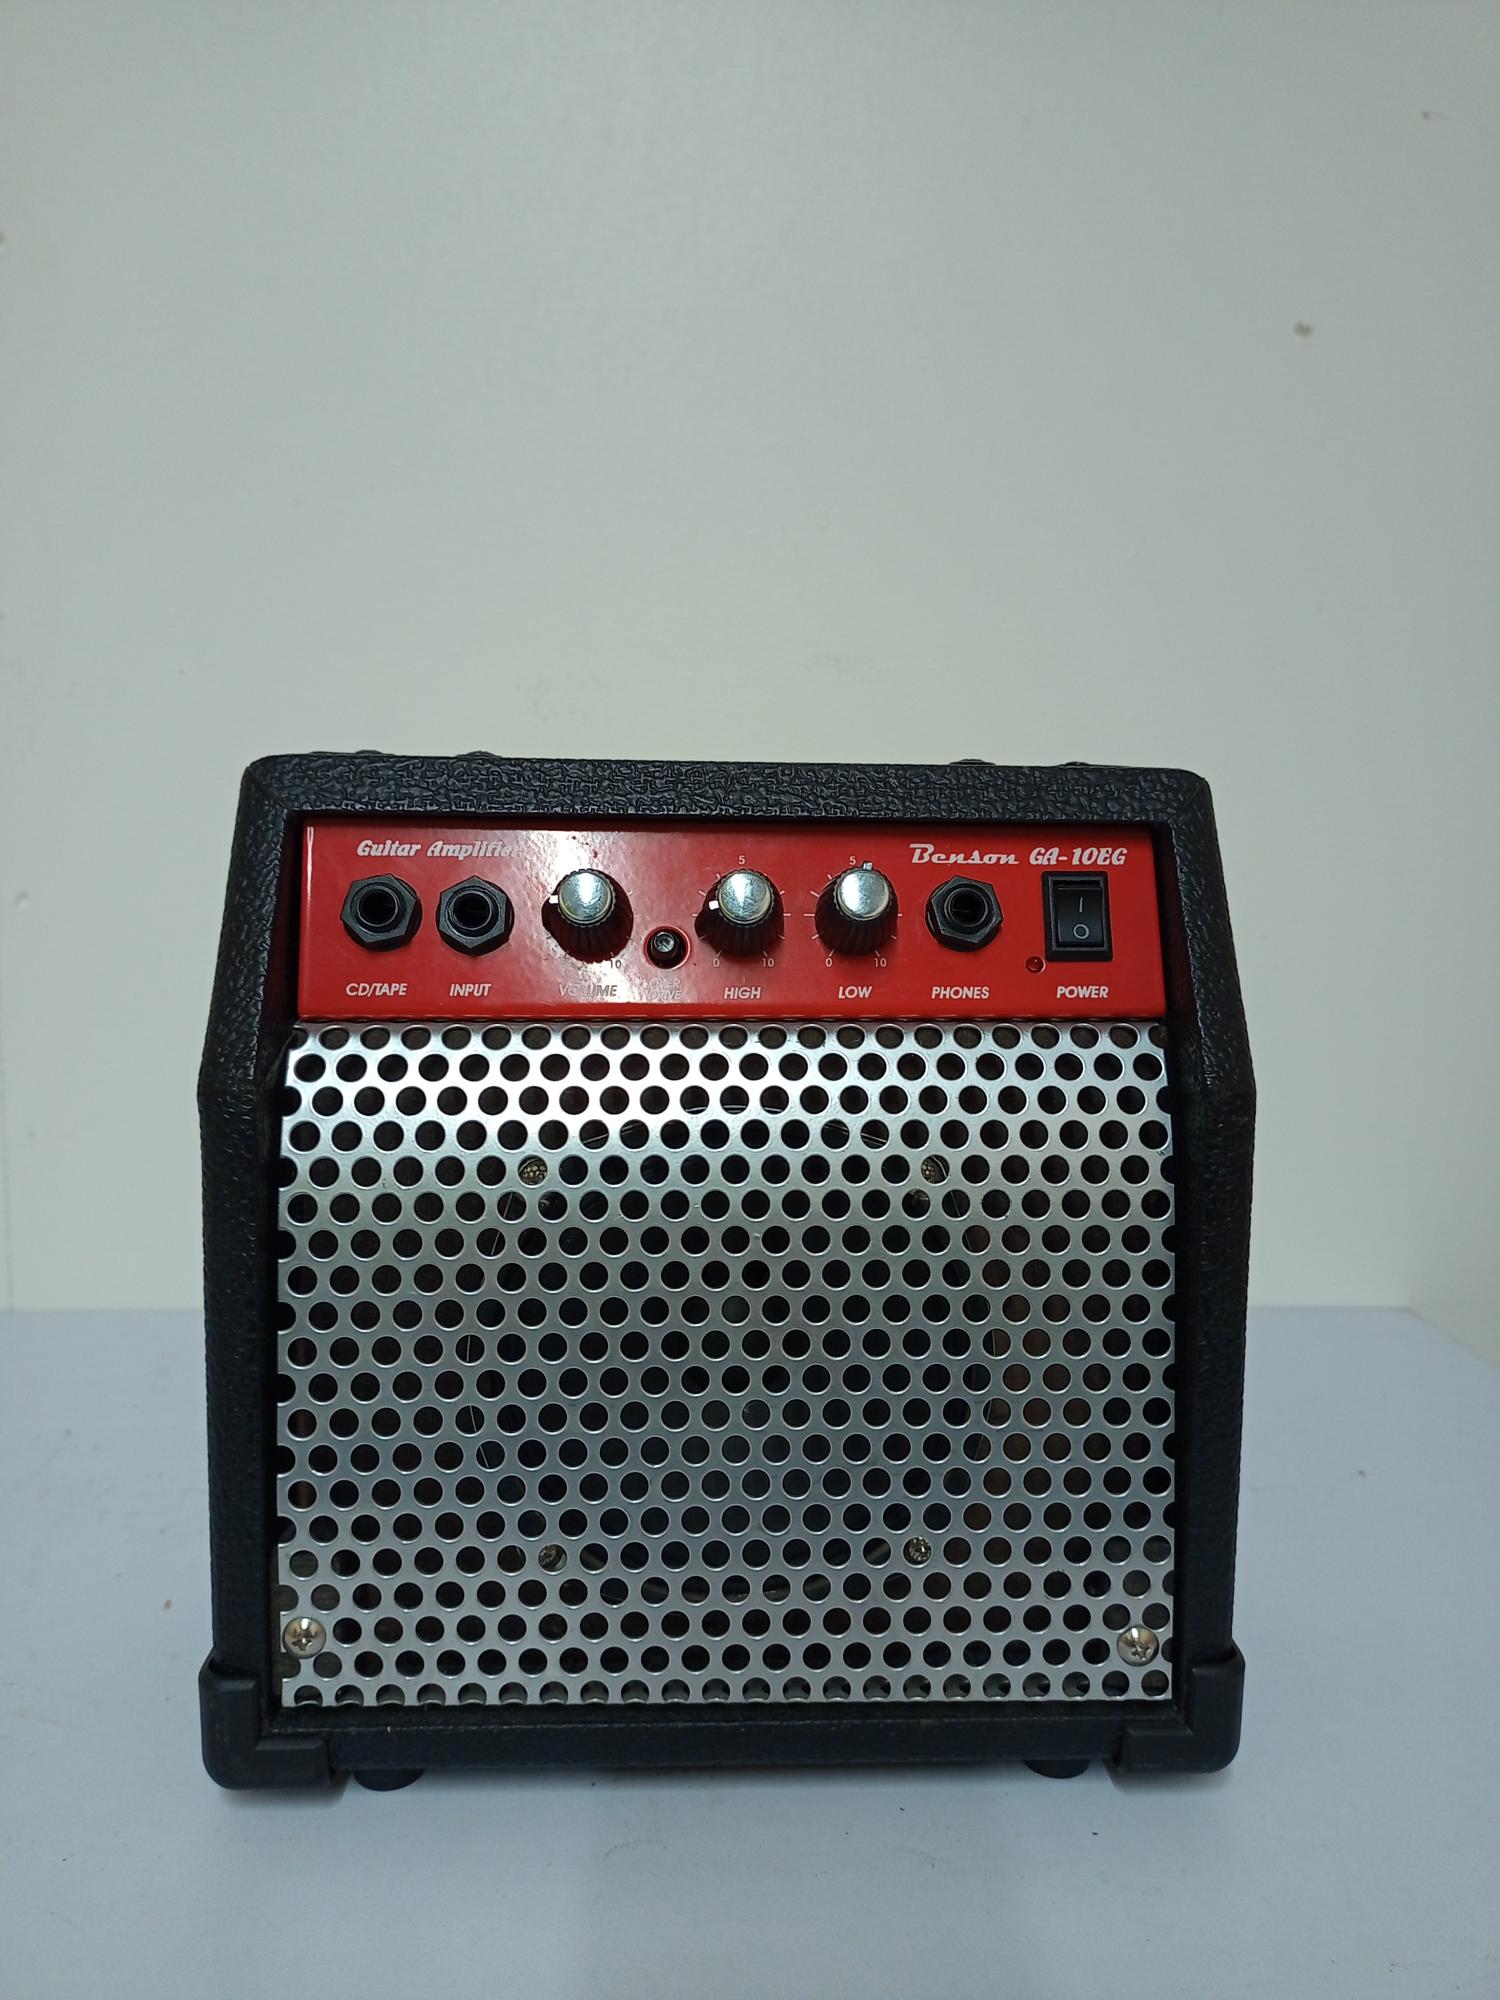 Benson amplifier